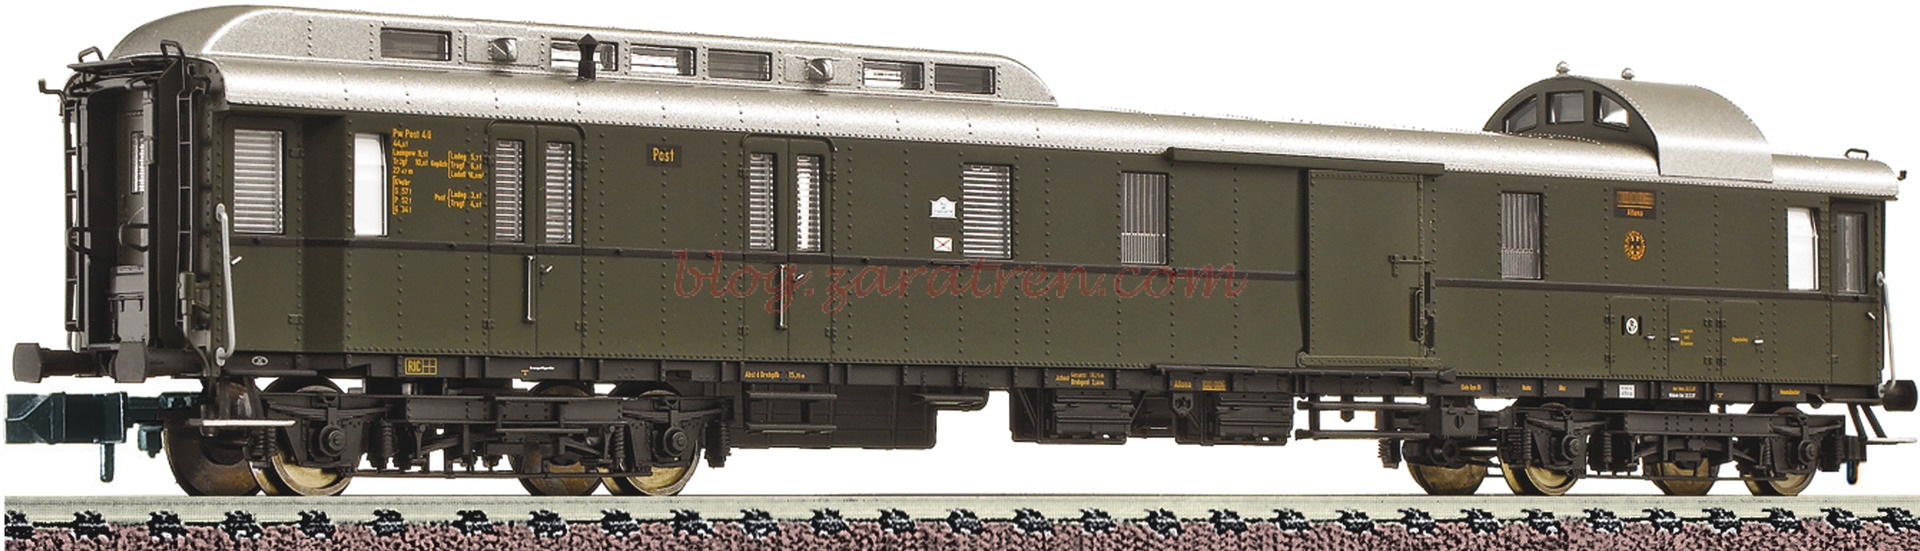 Fleischmann – Furgón de equipajes tipo Pwpost, 4u-28. DRG, Escala N, Ref: 863604.